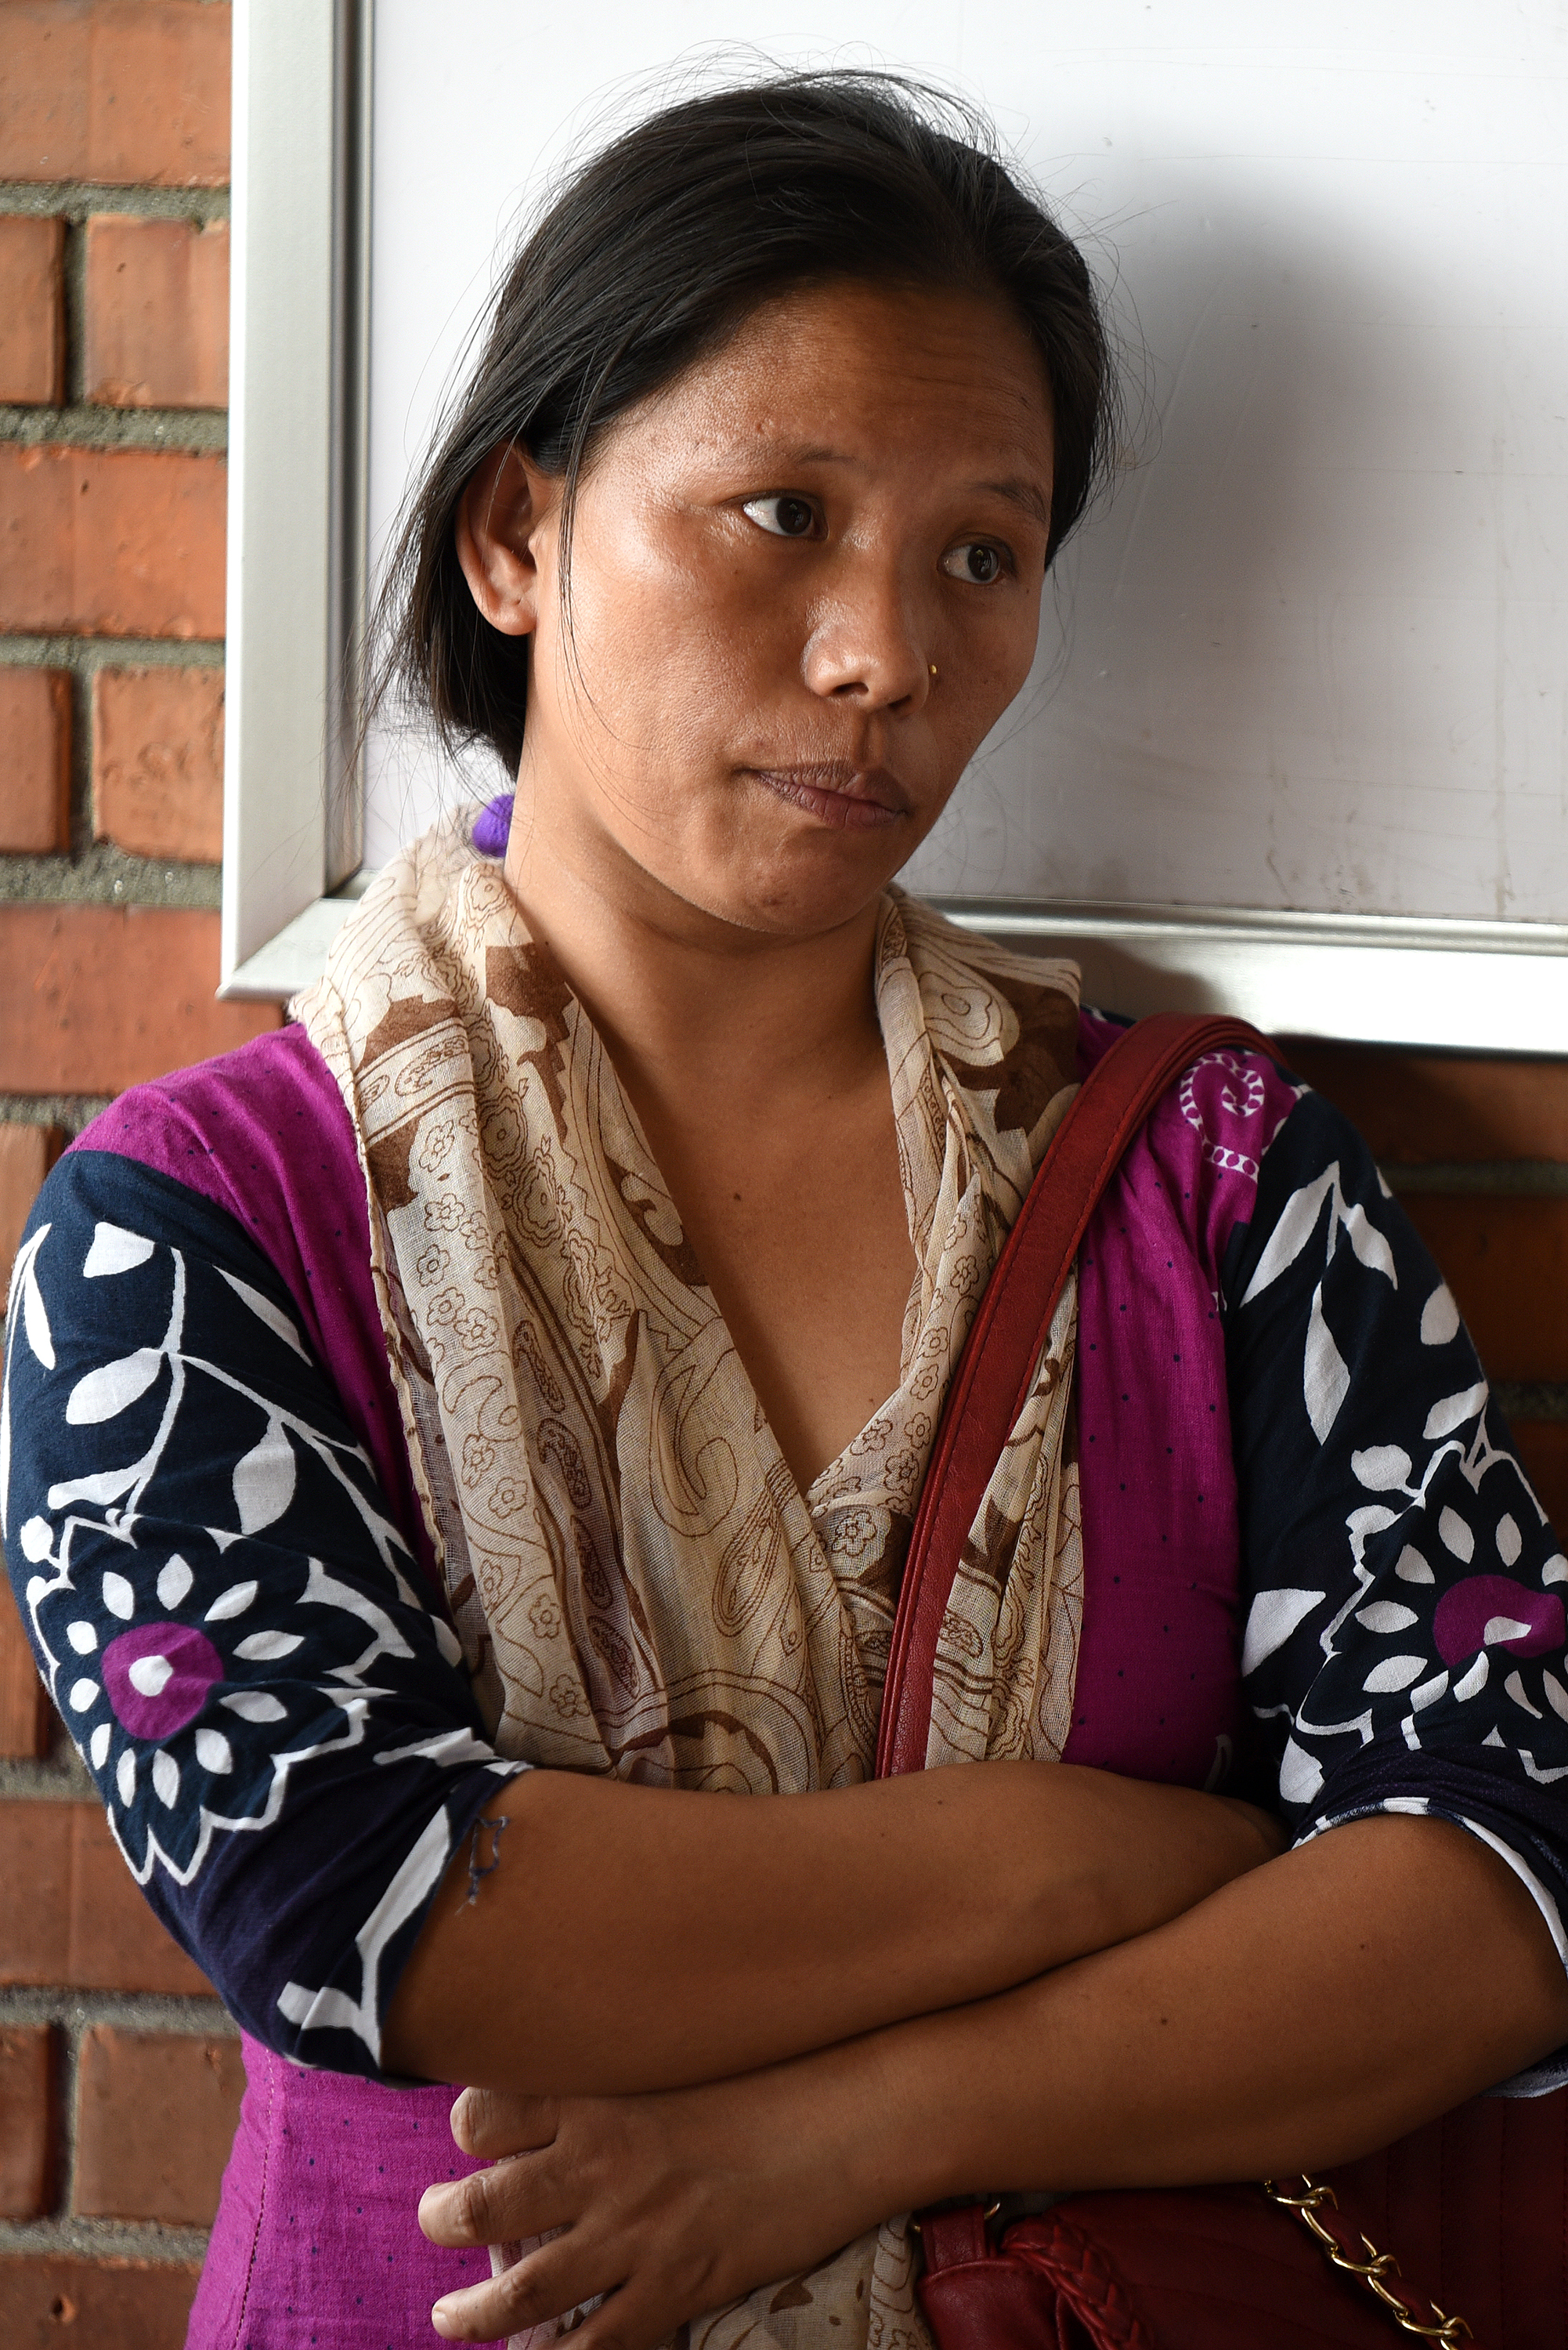 Bodies Of 5 Nepali Migrant Workers Brought To Kathmandu